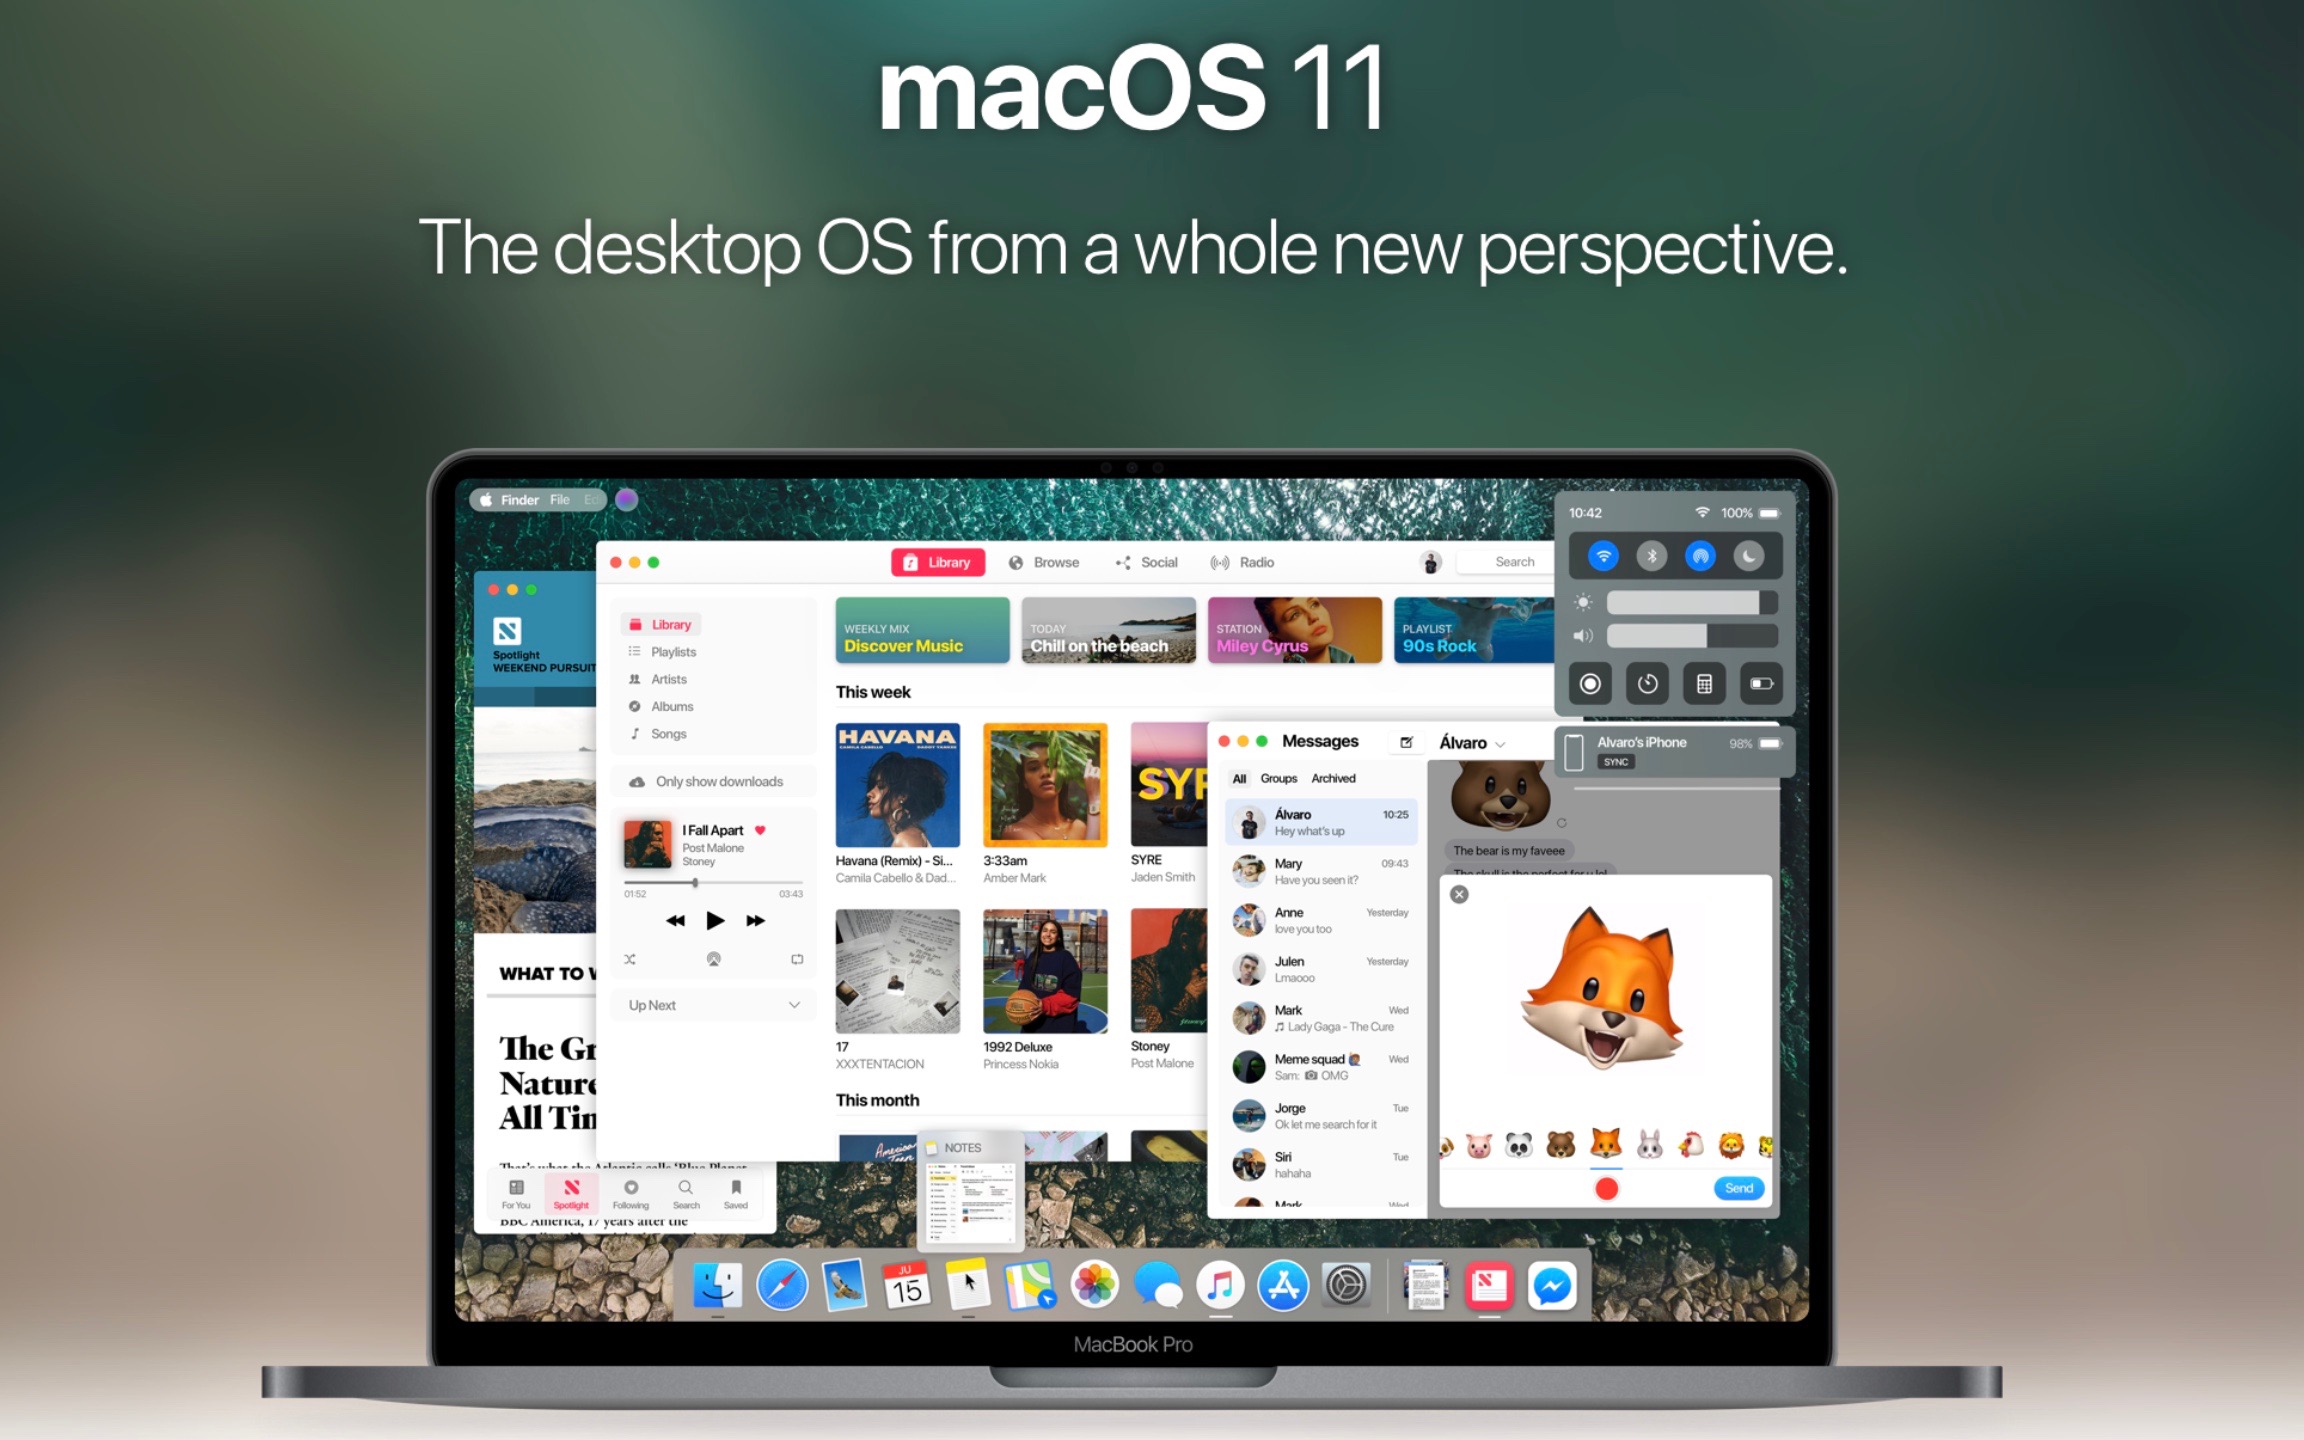 how to get macos 11 on macbook pro